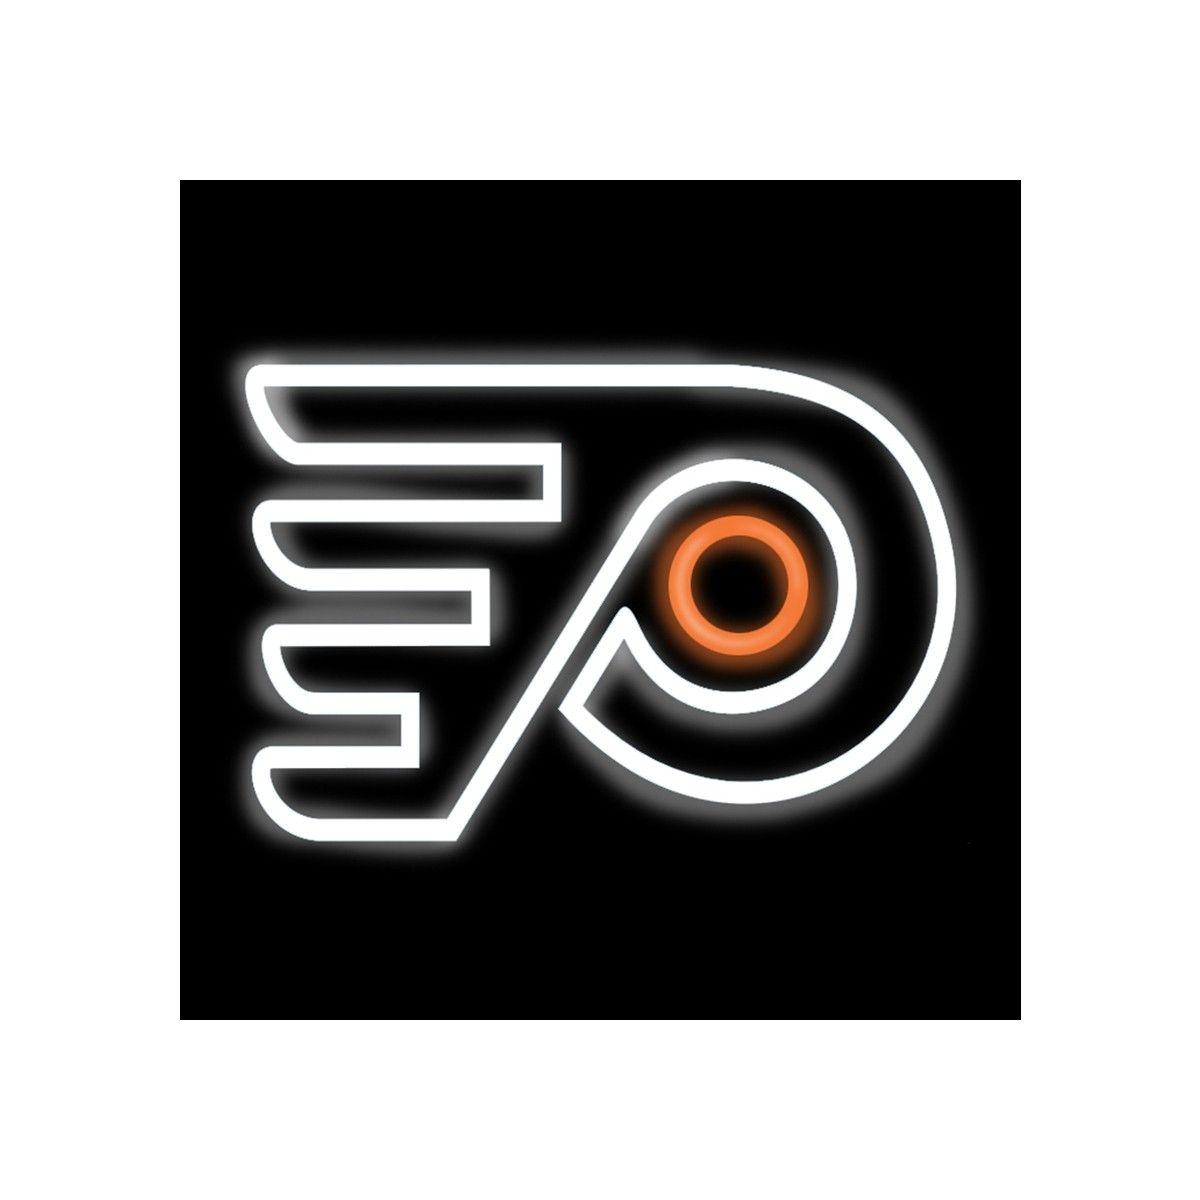 Philadelphia Flyers Logo - Philadelphia Flyers Logo Neon Sign by Imperial - Wells Fargo Center ...